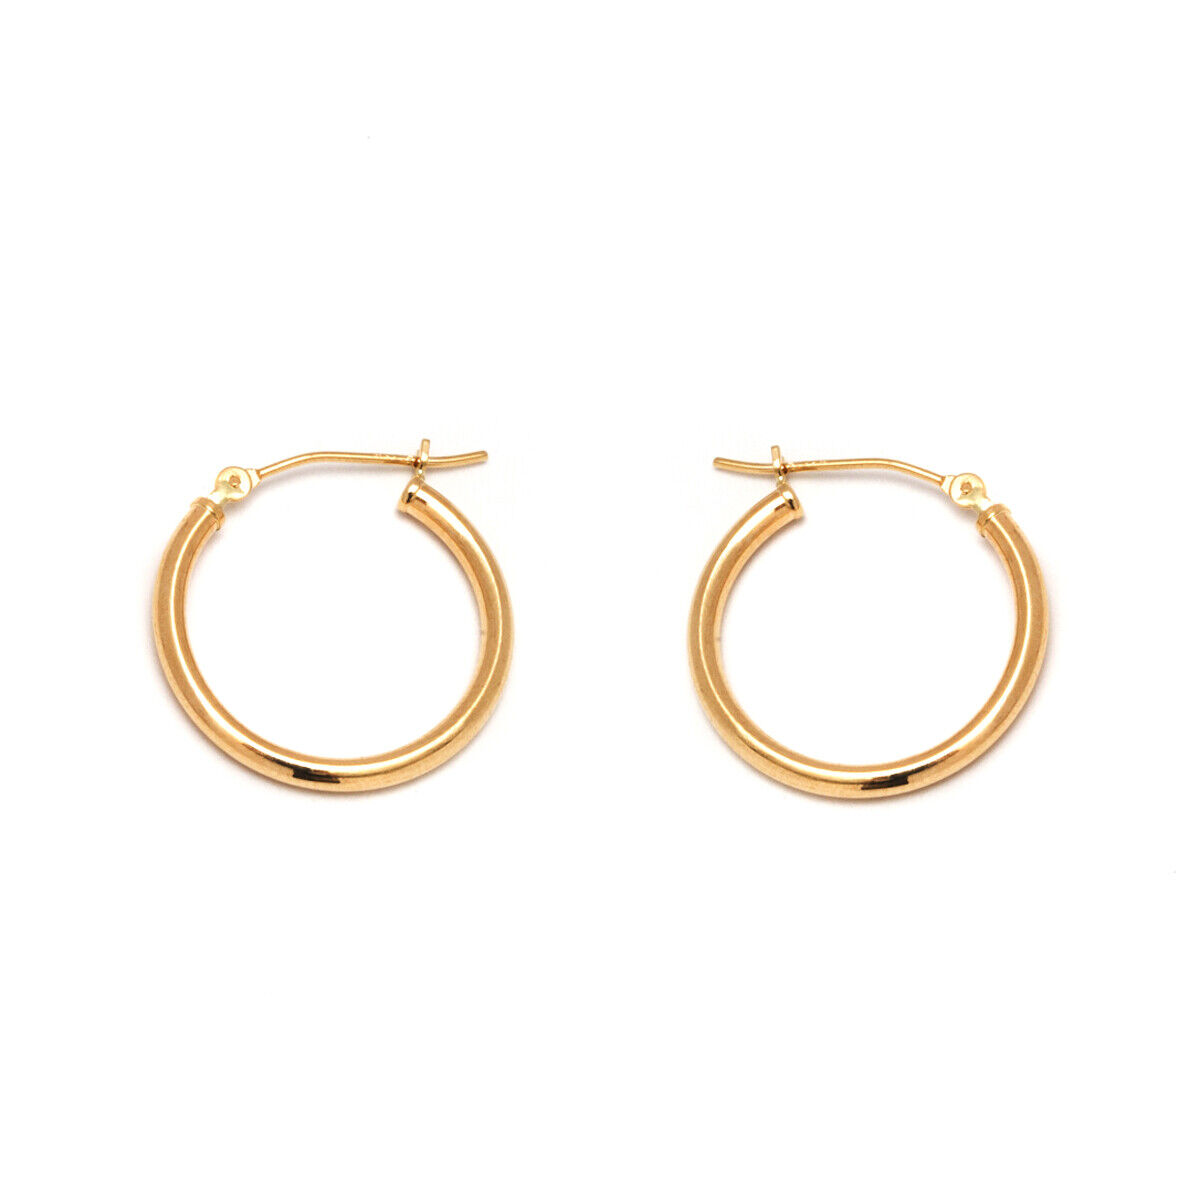 14K Yellow Gold Rivet Hoop Earrings - 1x12MM or 1x14MM - Gift for Her